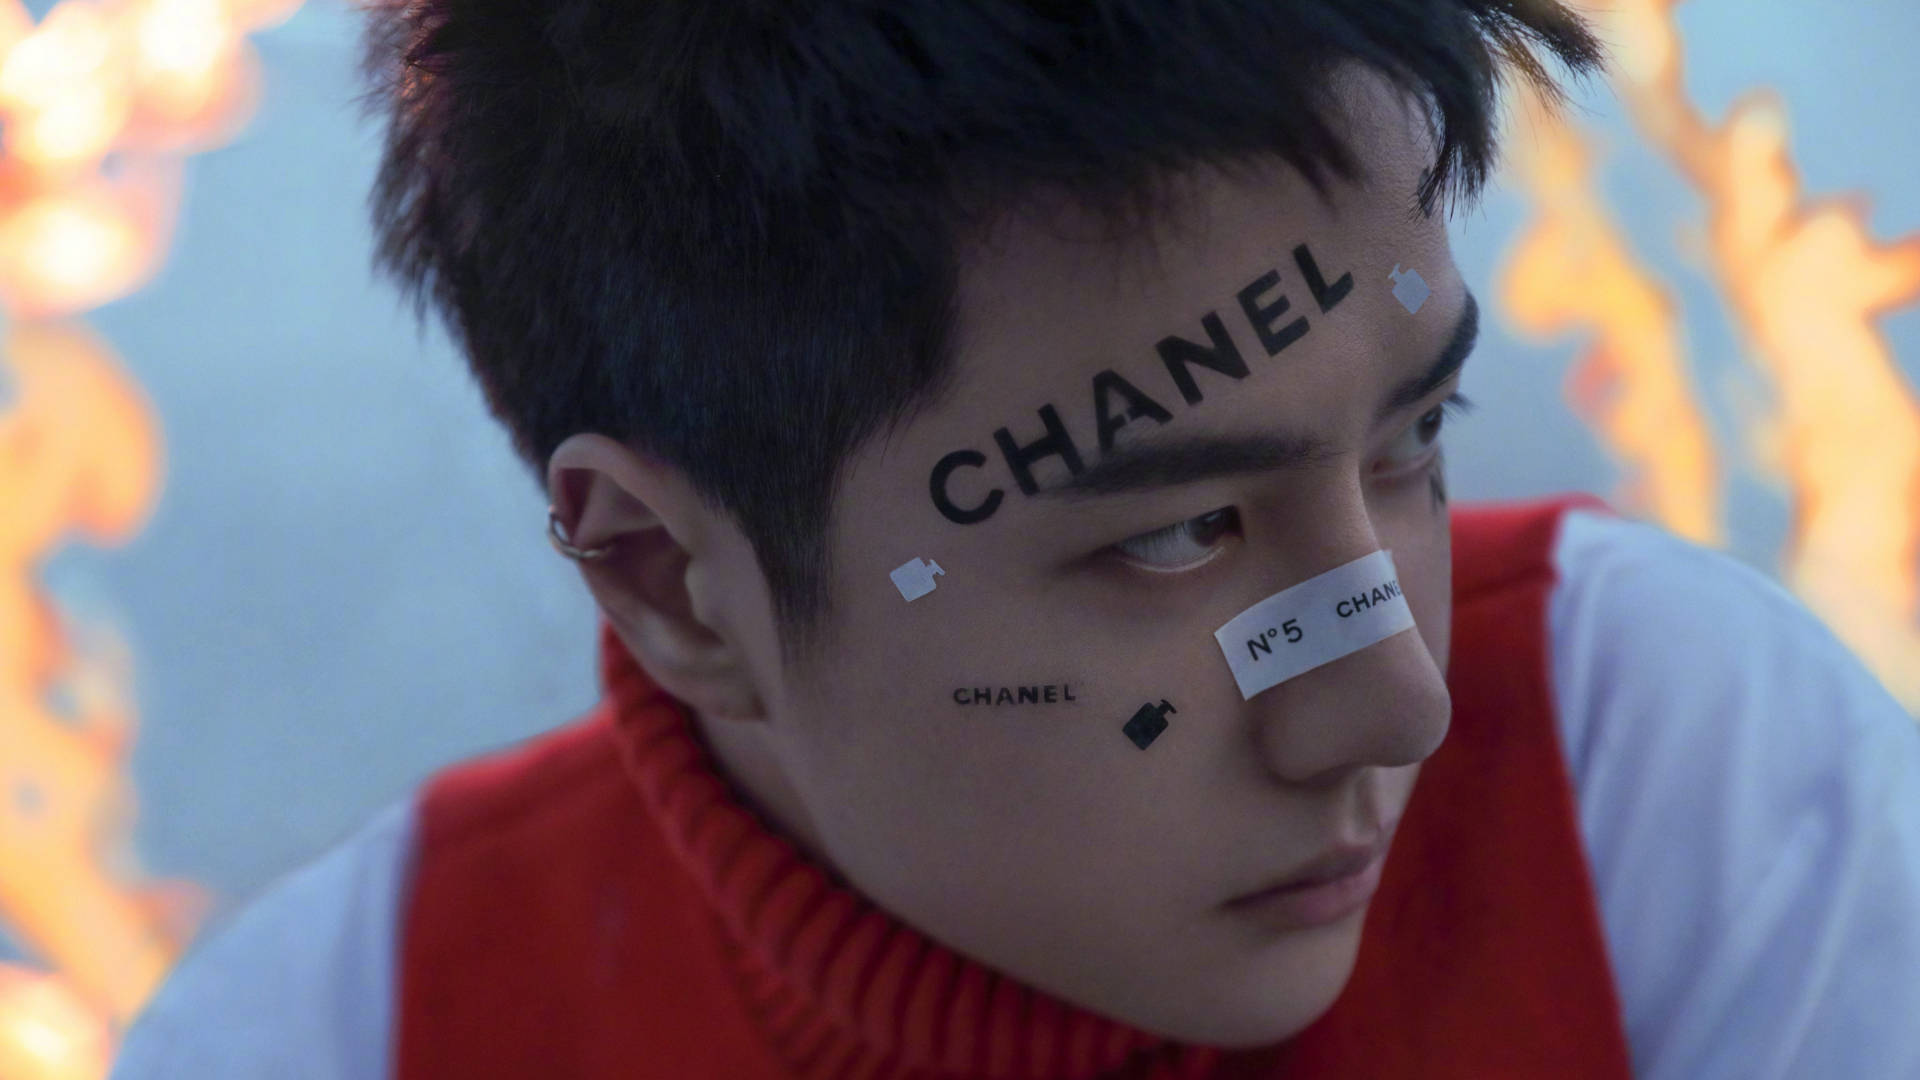 Wang Yibo Chanel Face Art